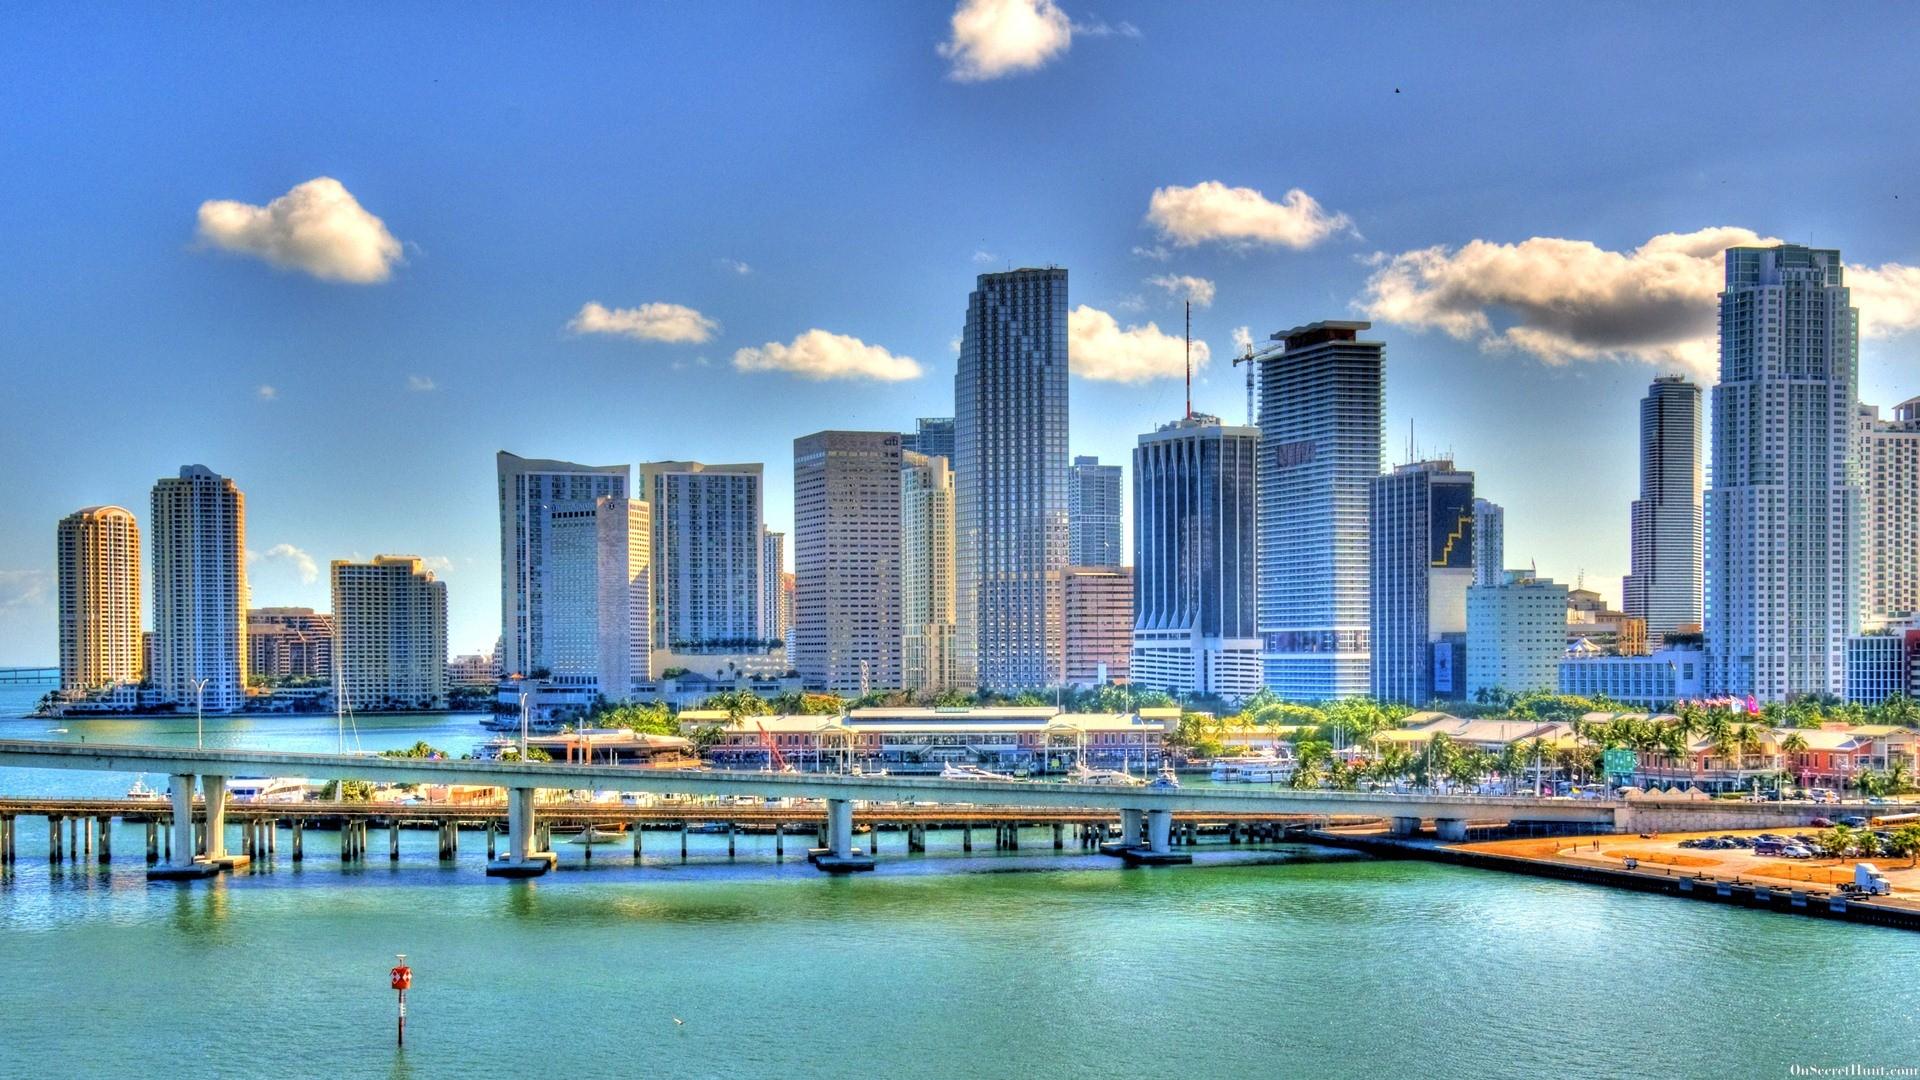 Miami the capital of Florida